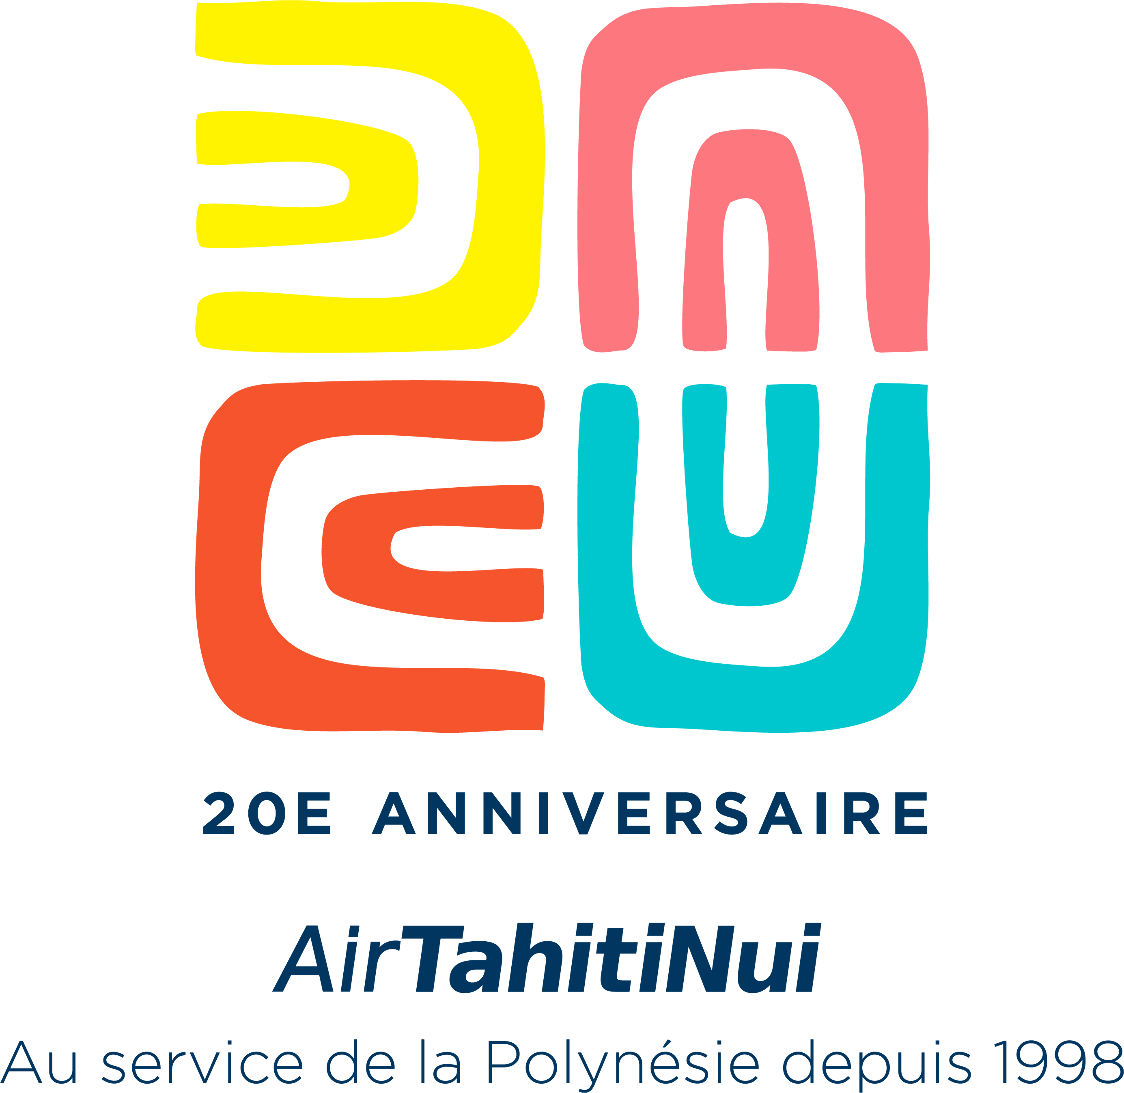 Nouveau logo pour Air Tahiti Nui